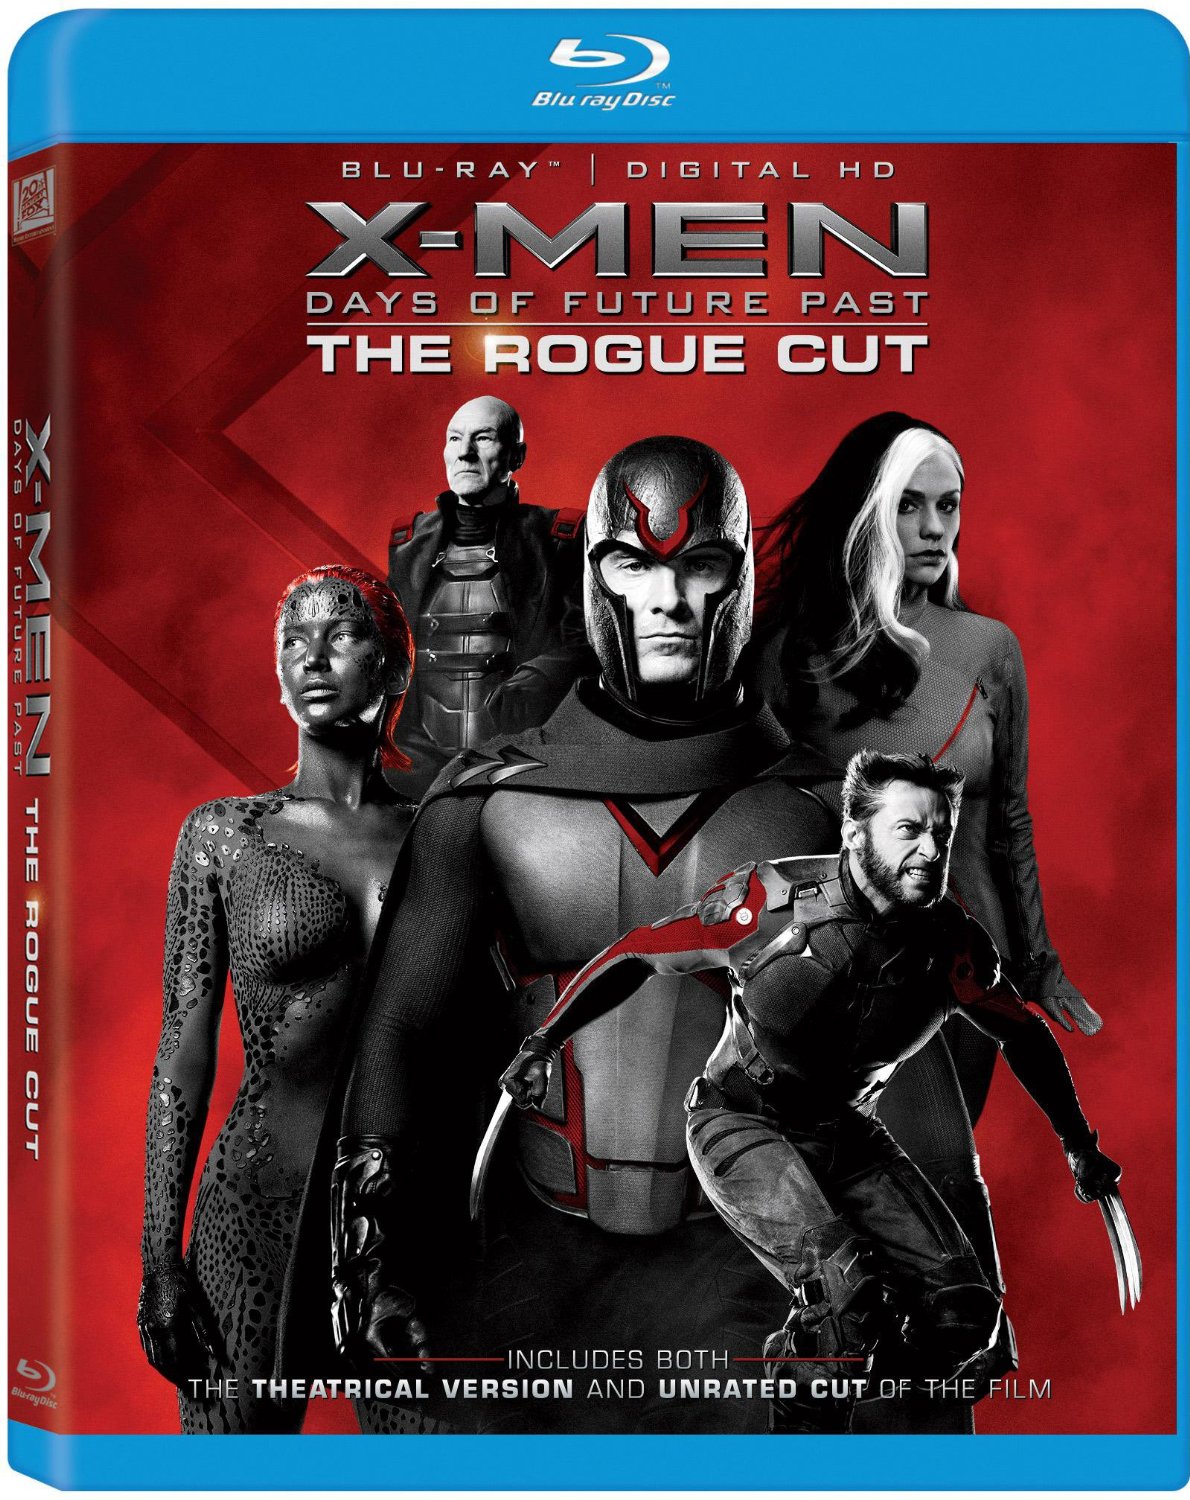 X Men Days Of Future Past: Rogue Cut review